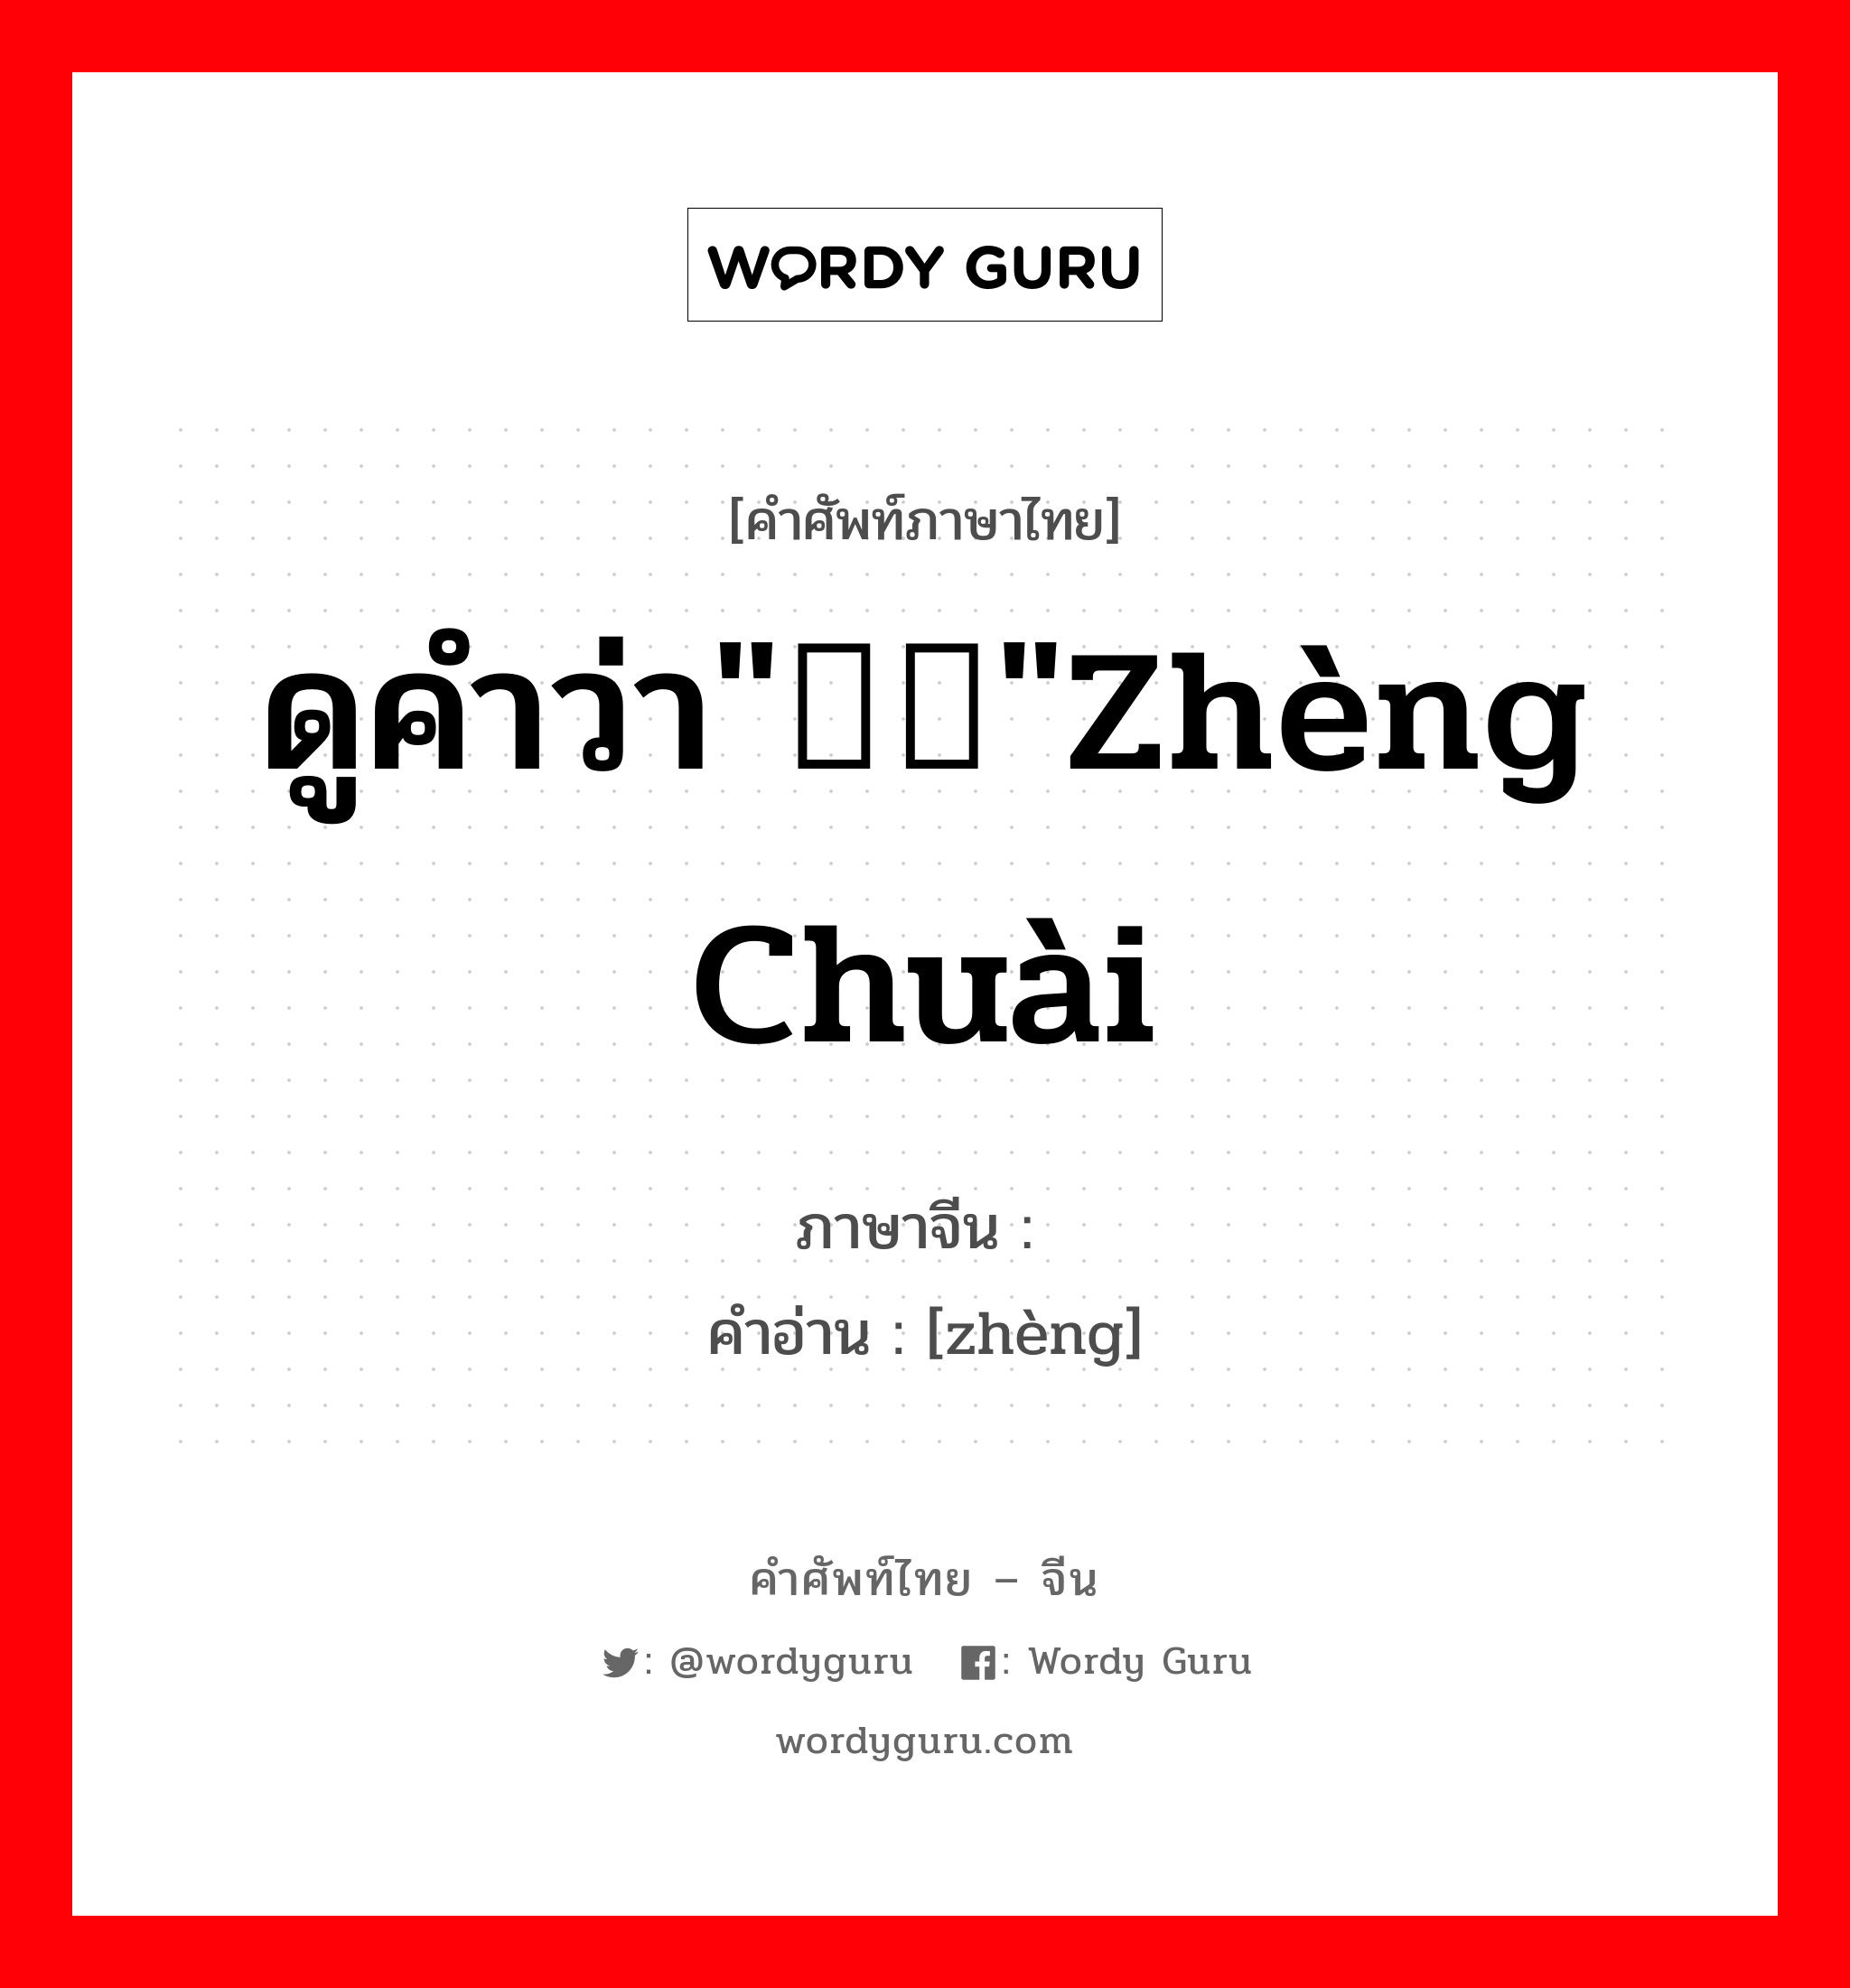  ภาษาไทย?, คำศัพท์ภาษาไทย - จีน  ภาษาจีน ดูคำว่า""zhèng chuài คำอ่าน [zhèng]